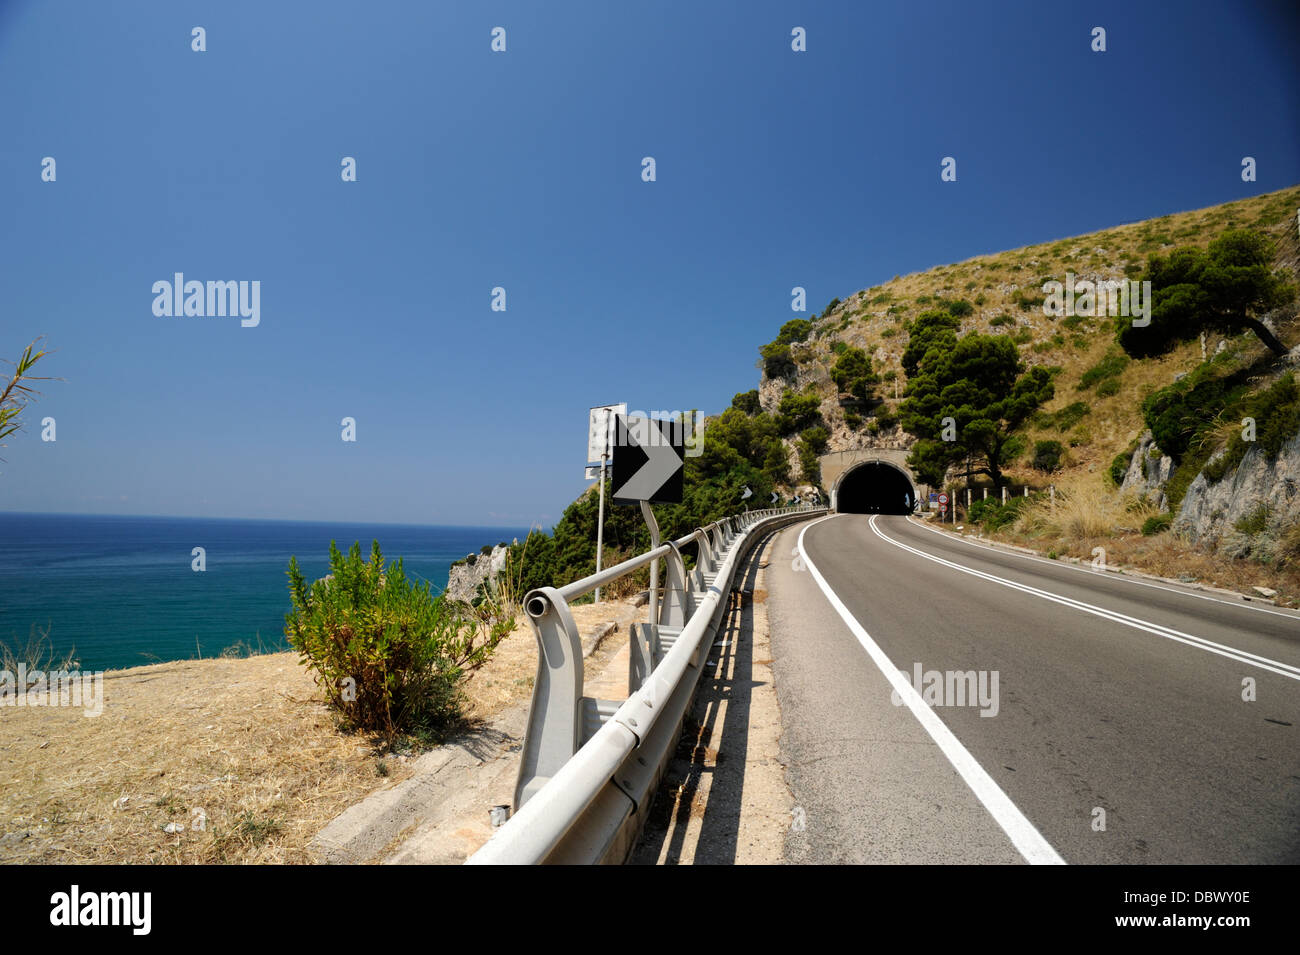 Italy, Lazio, coastline, Parco regionale Riviera di Ulisse, coastal road Stock Photo